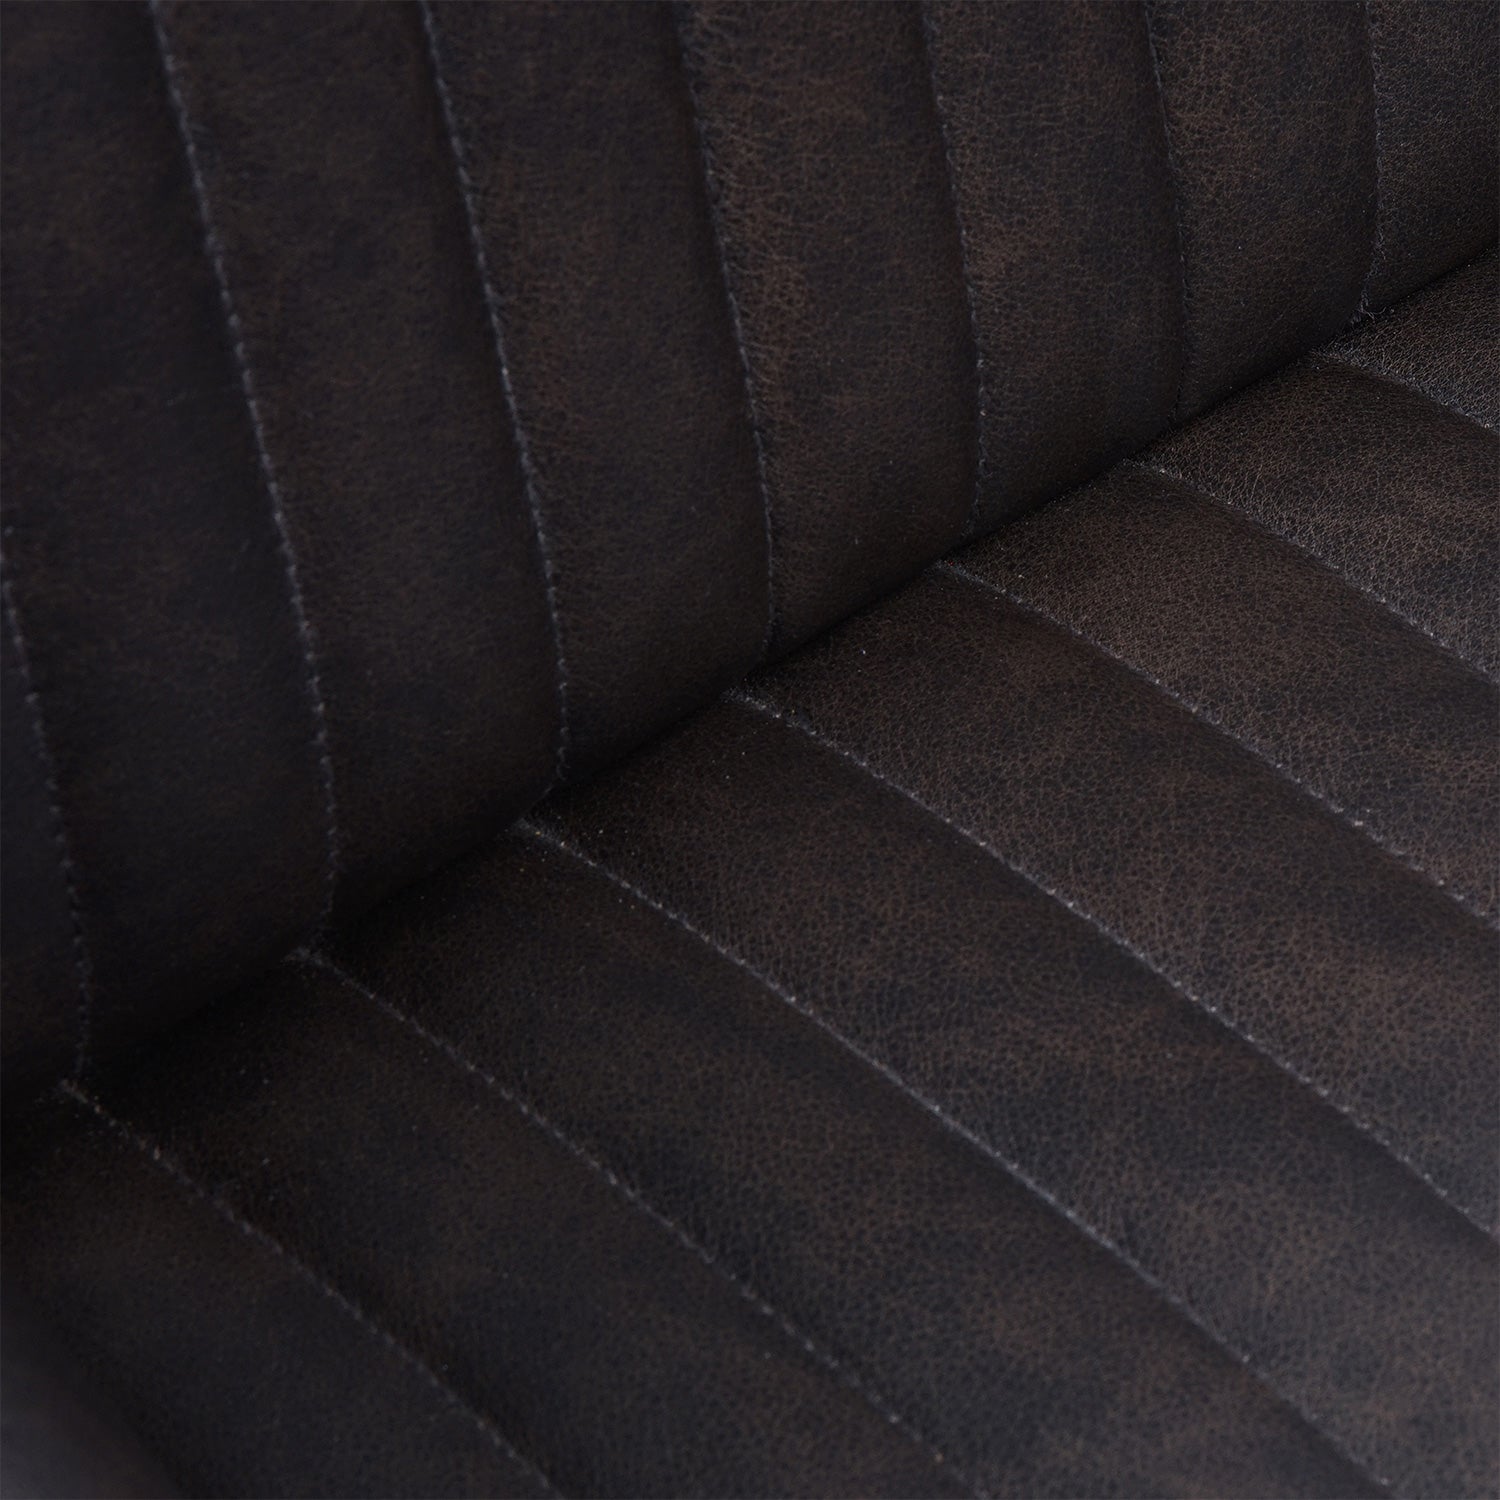 Collins Ara Antigo Leather Chair Umber Seat Close Up